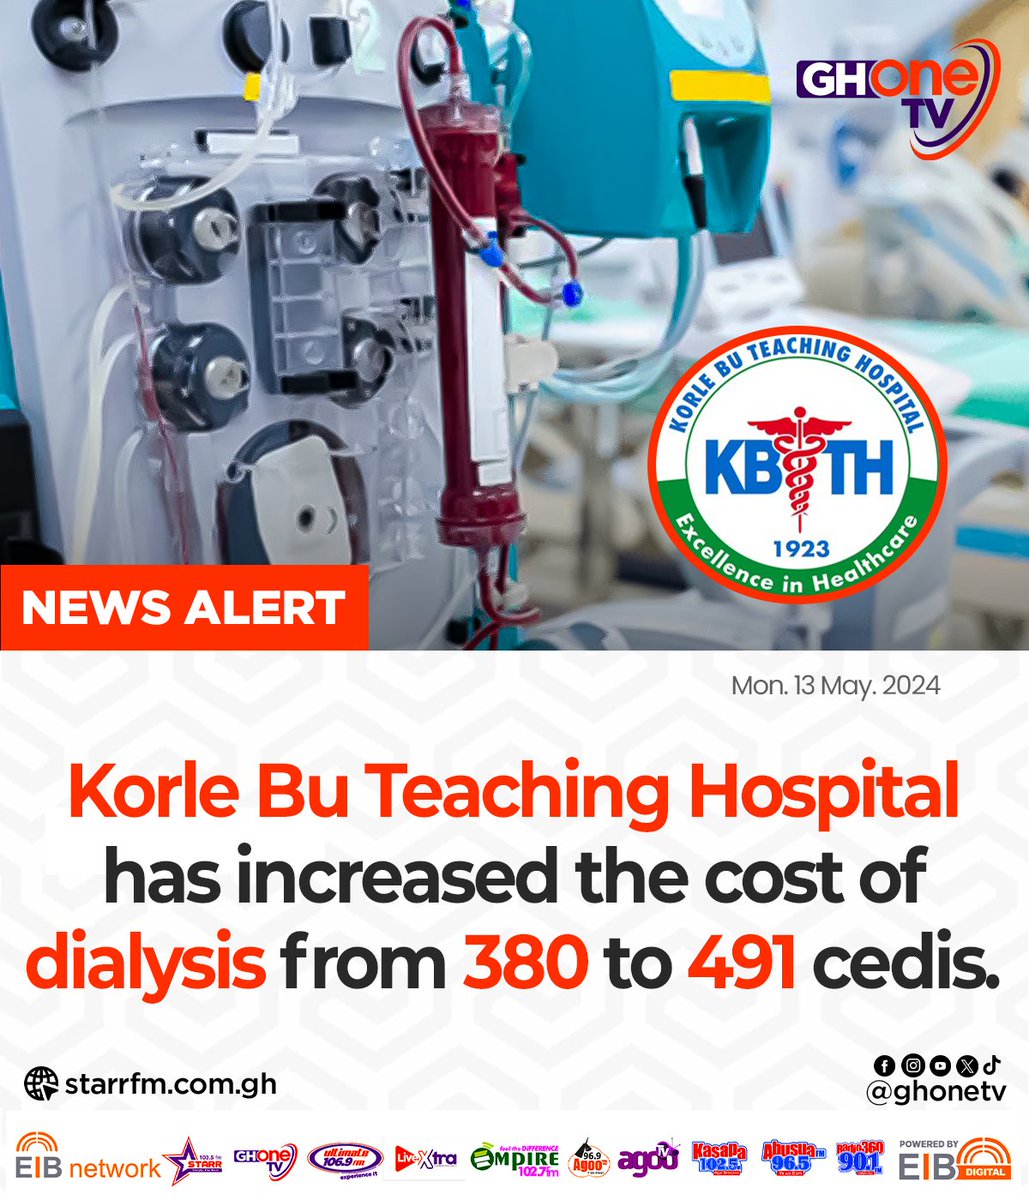 Korle Bu Teaching Hospital increases dialysis cost from GHC380 to GHC491...

#GHOneNews #GHOneTV #NewsAlert #Dialysis #KidsOnDialysis #KidneyFailure